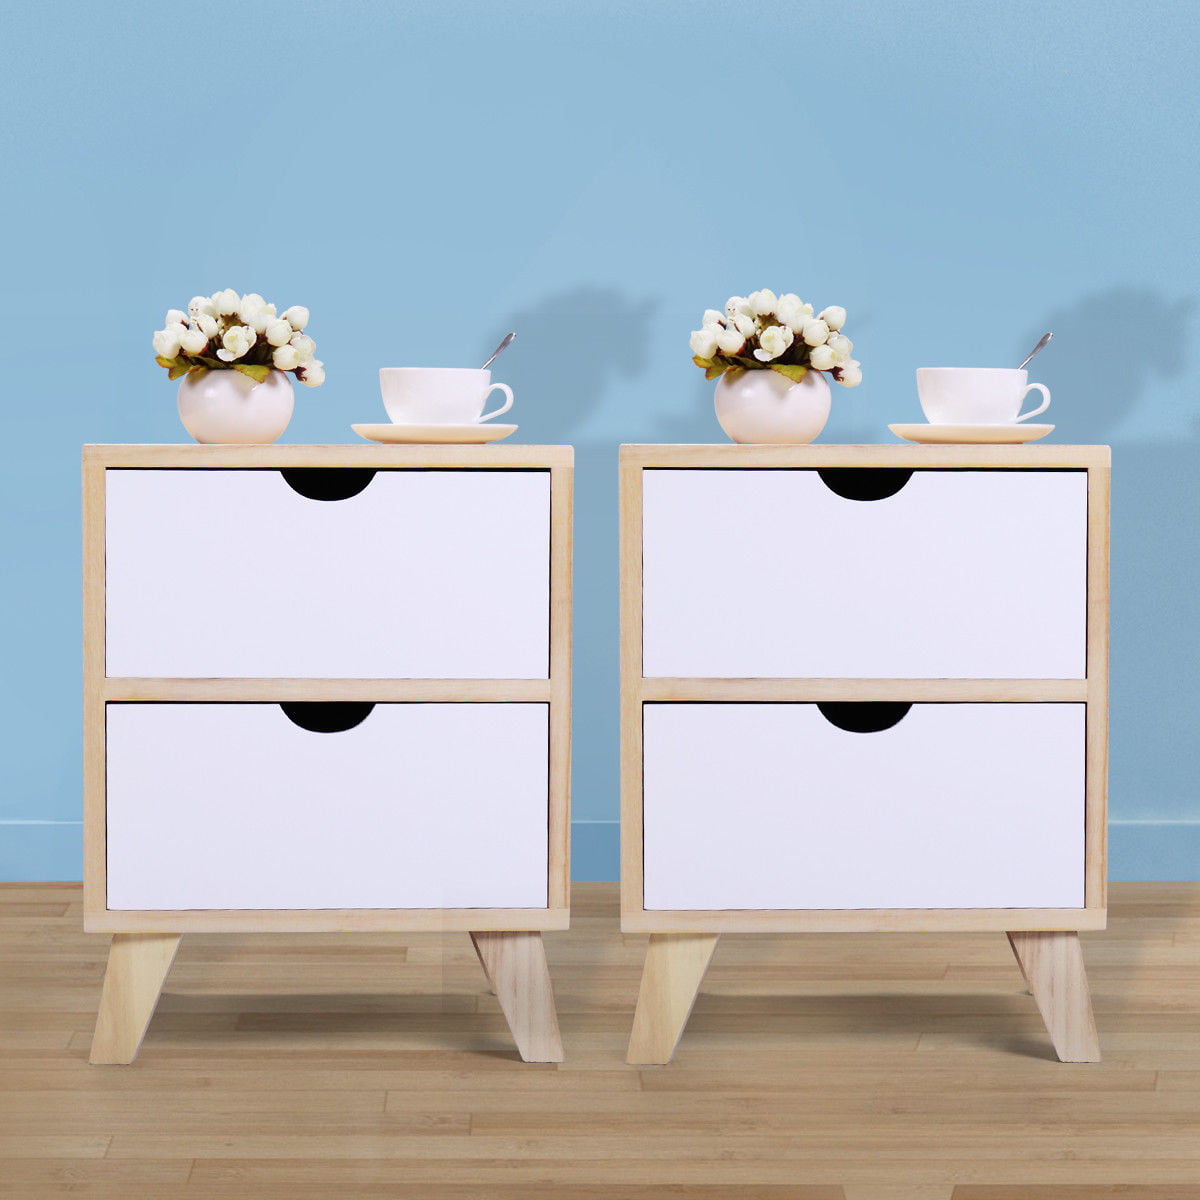 Details about   Coffee Table w 2 Bins Drawer Storage Modern Furniture Wood Espresso/Brown New 